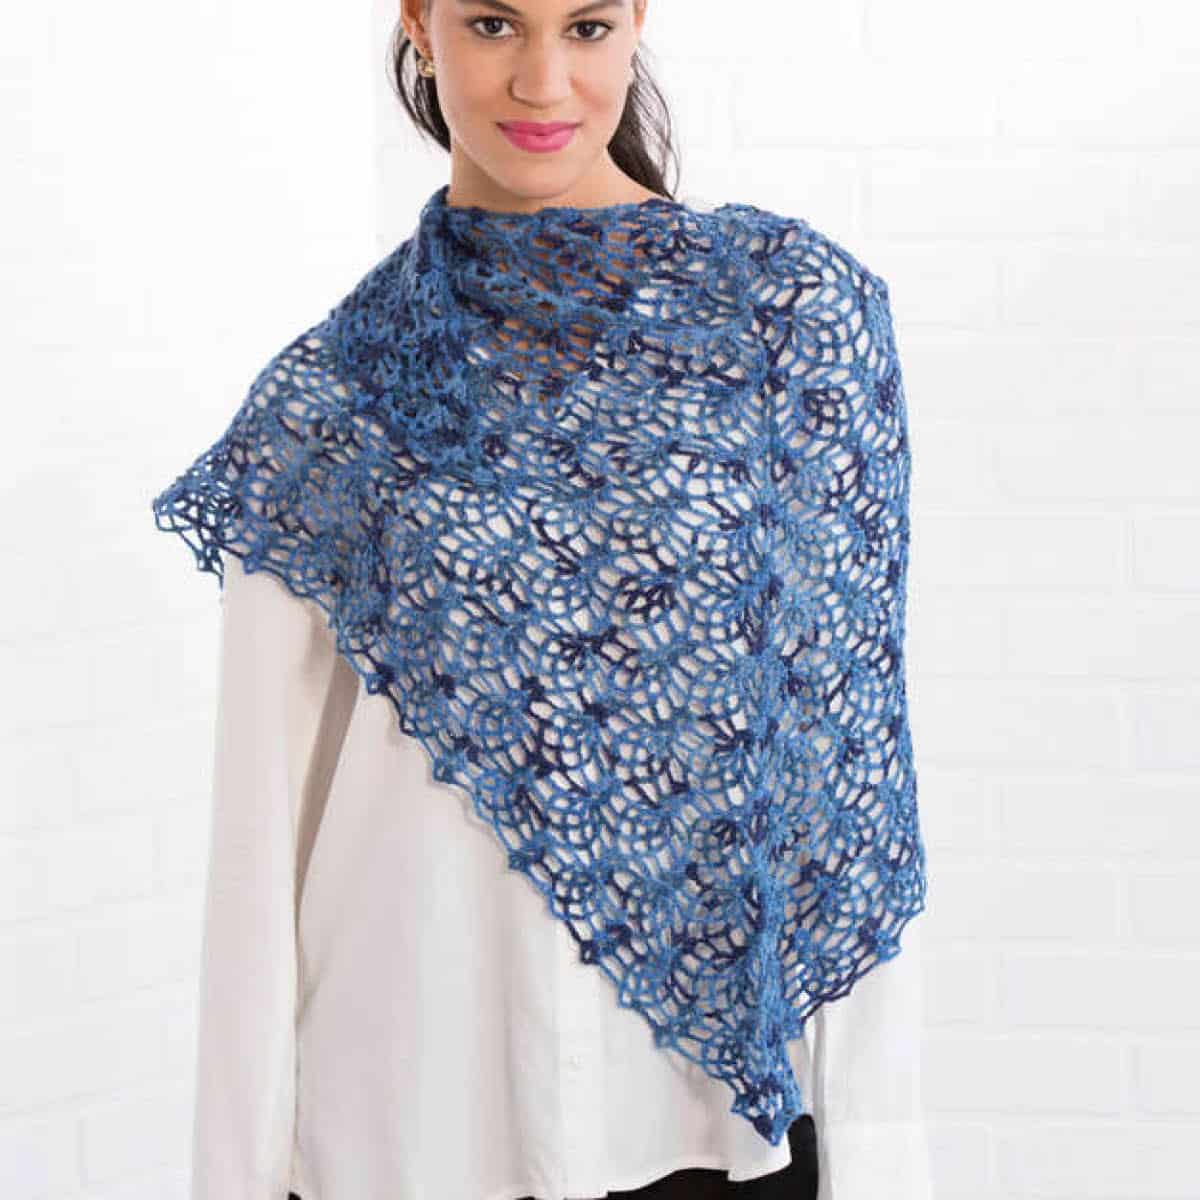 Crochet Elegant Shawl Cover Up